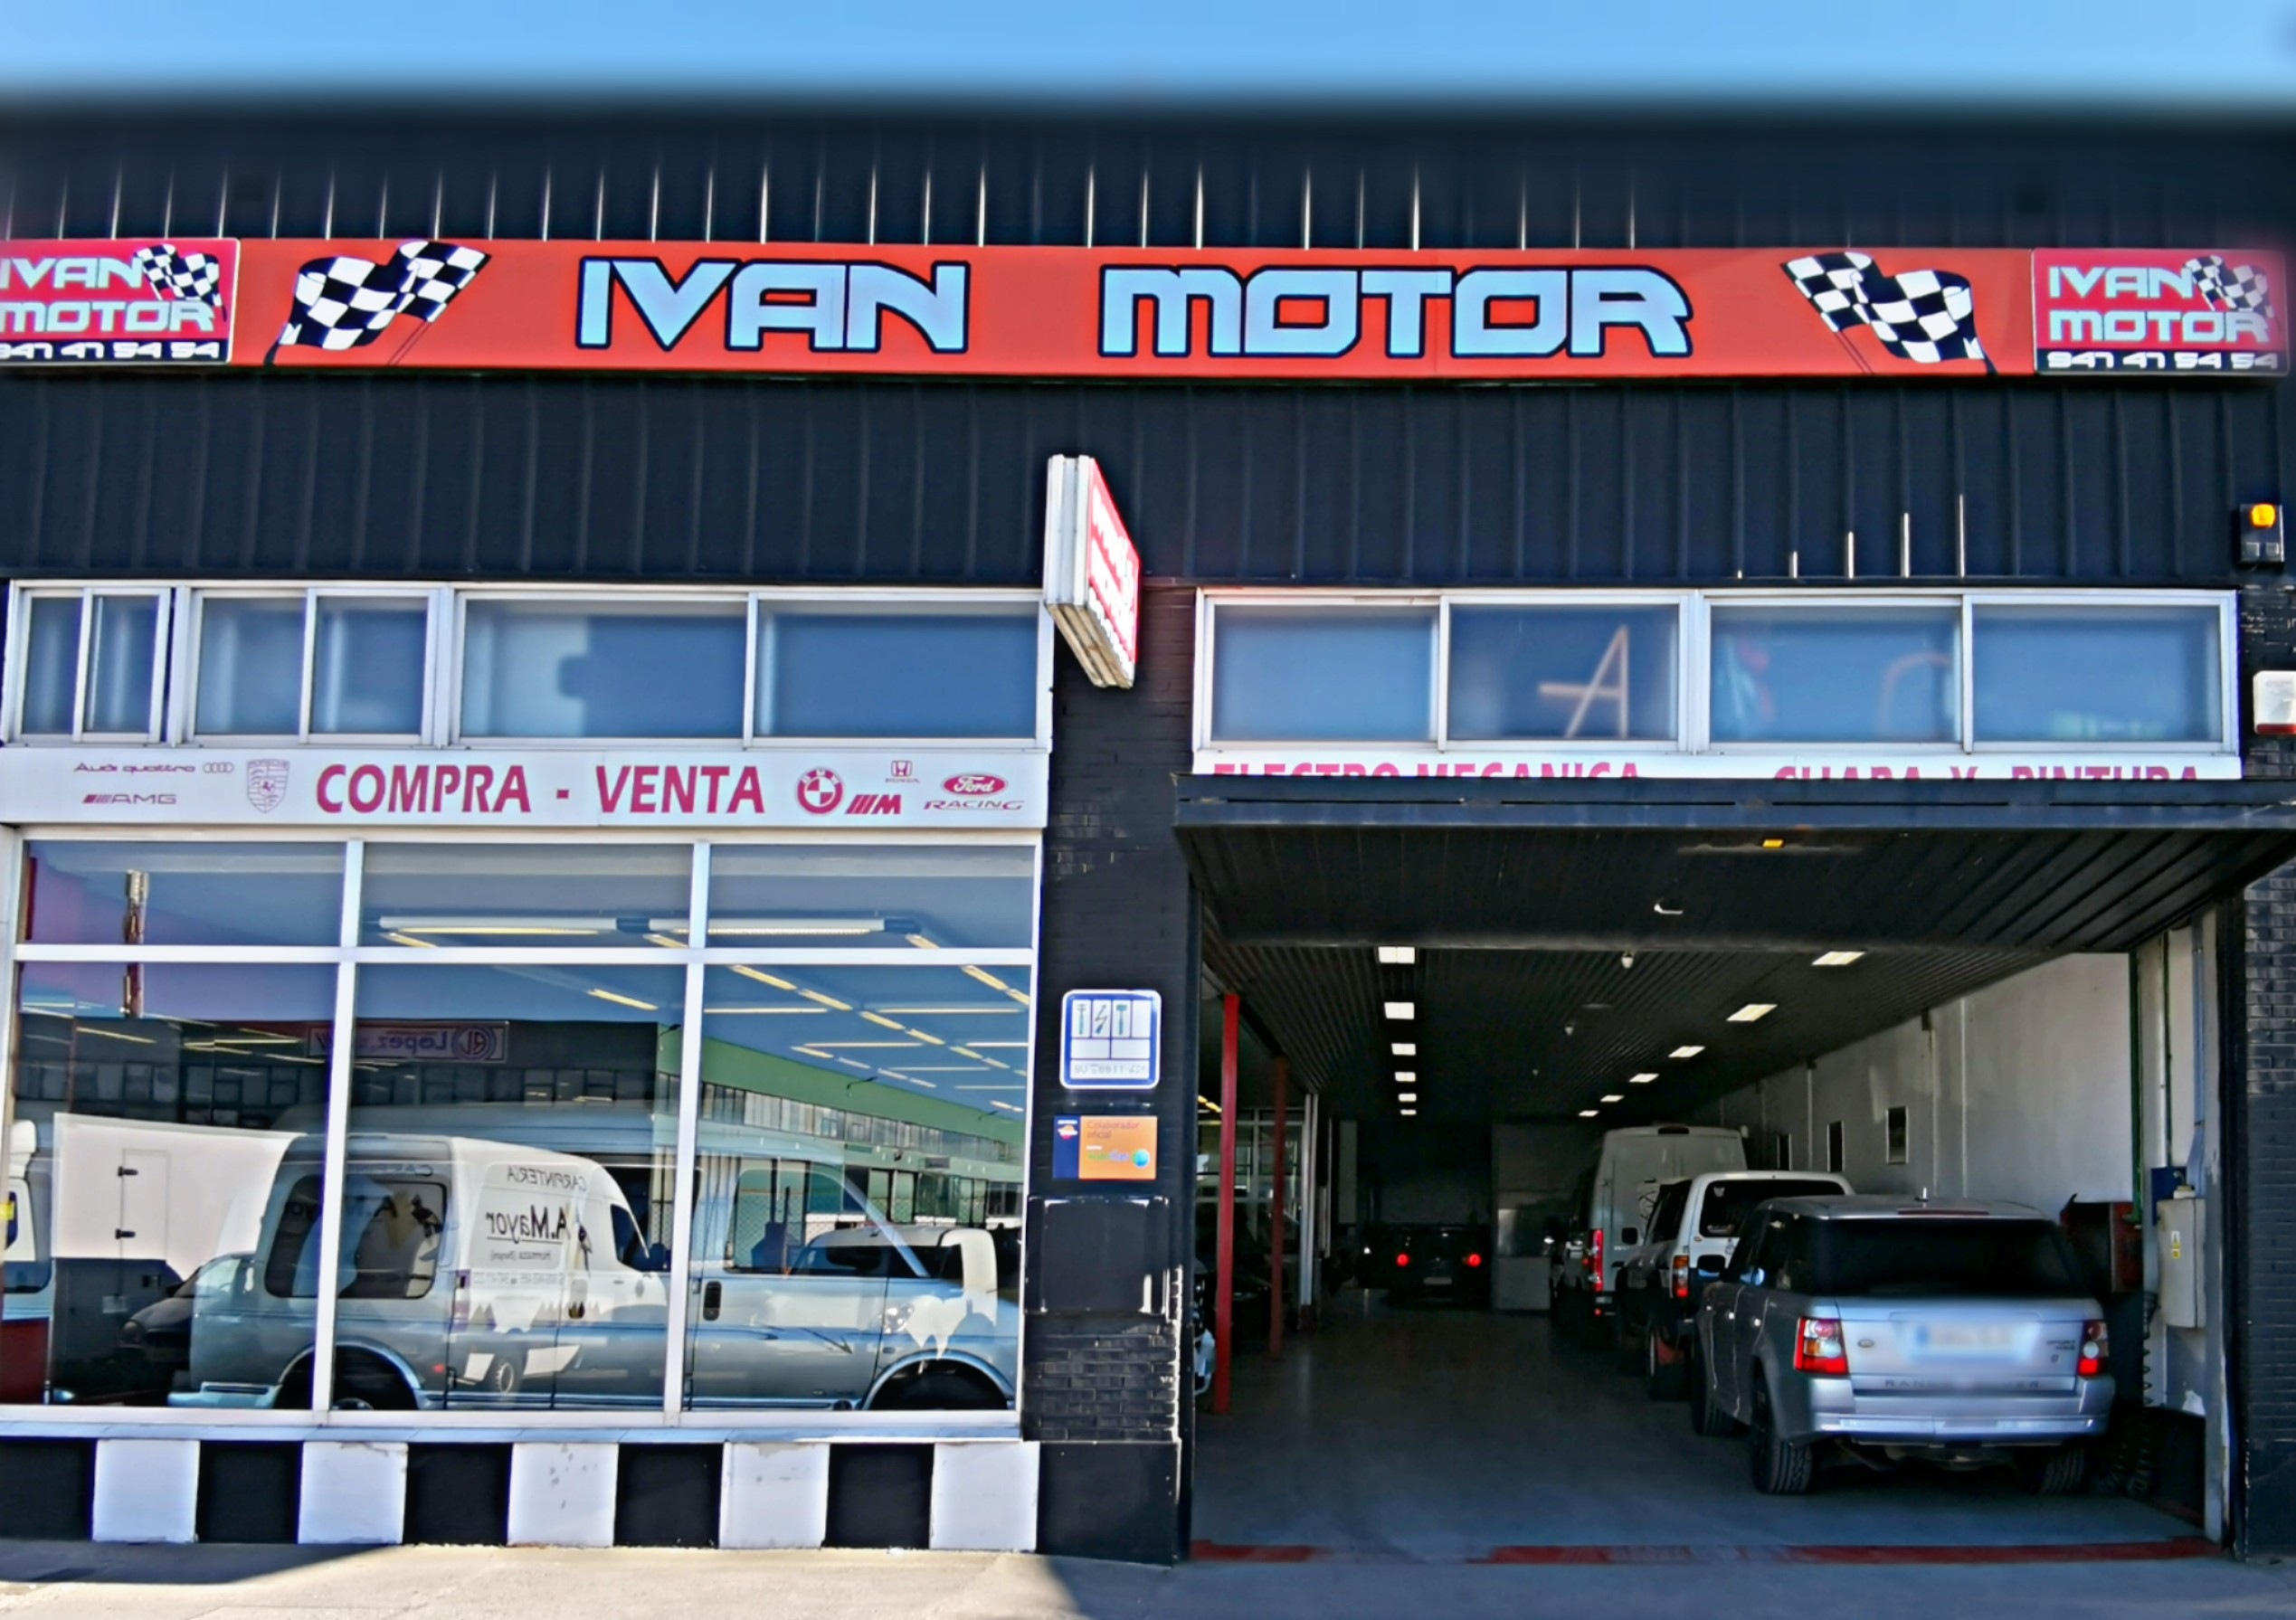 Iván Motor Burgos